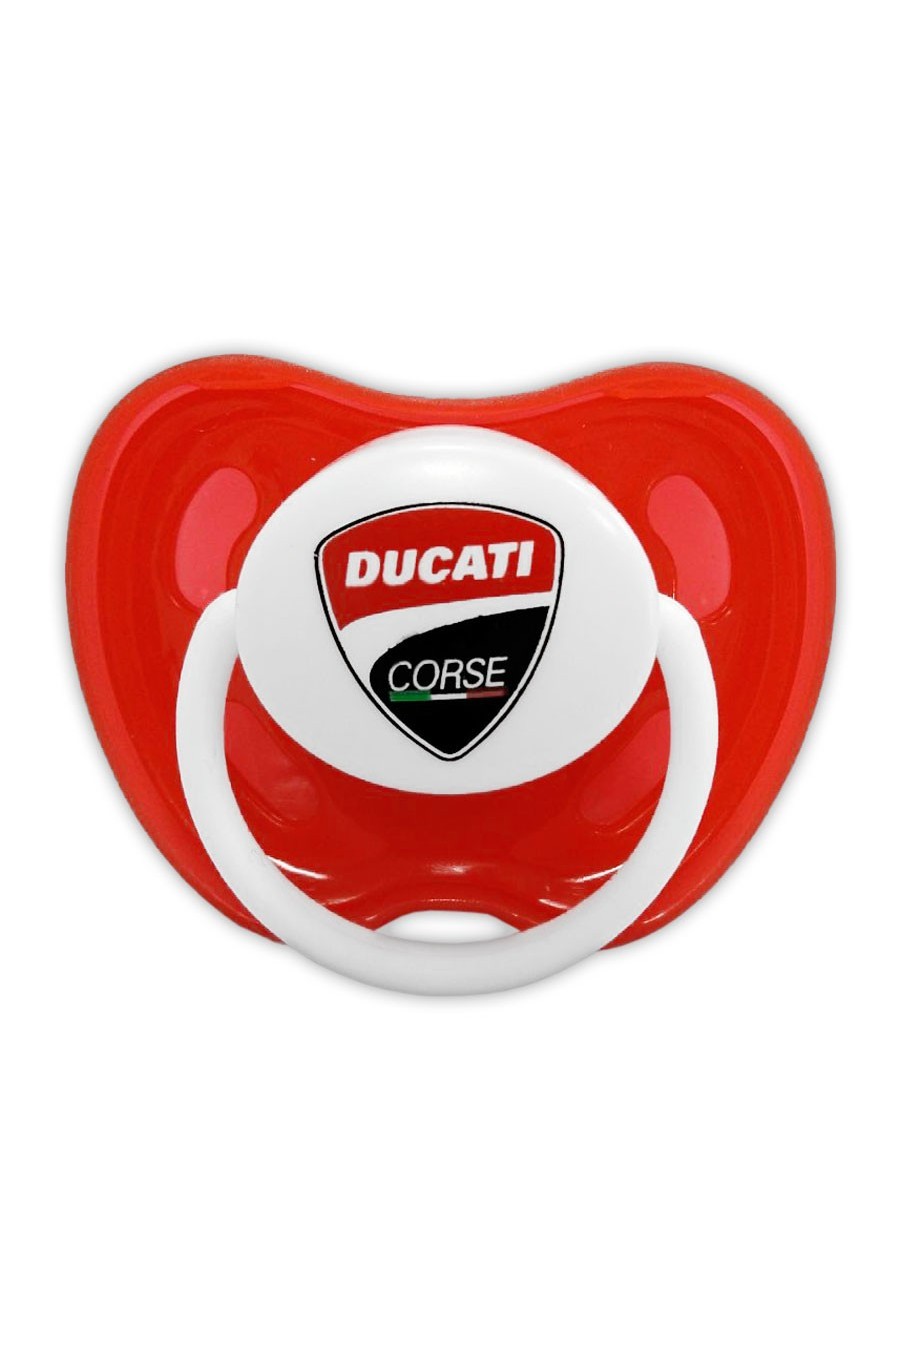 Ducati Corse Baby Schnuller